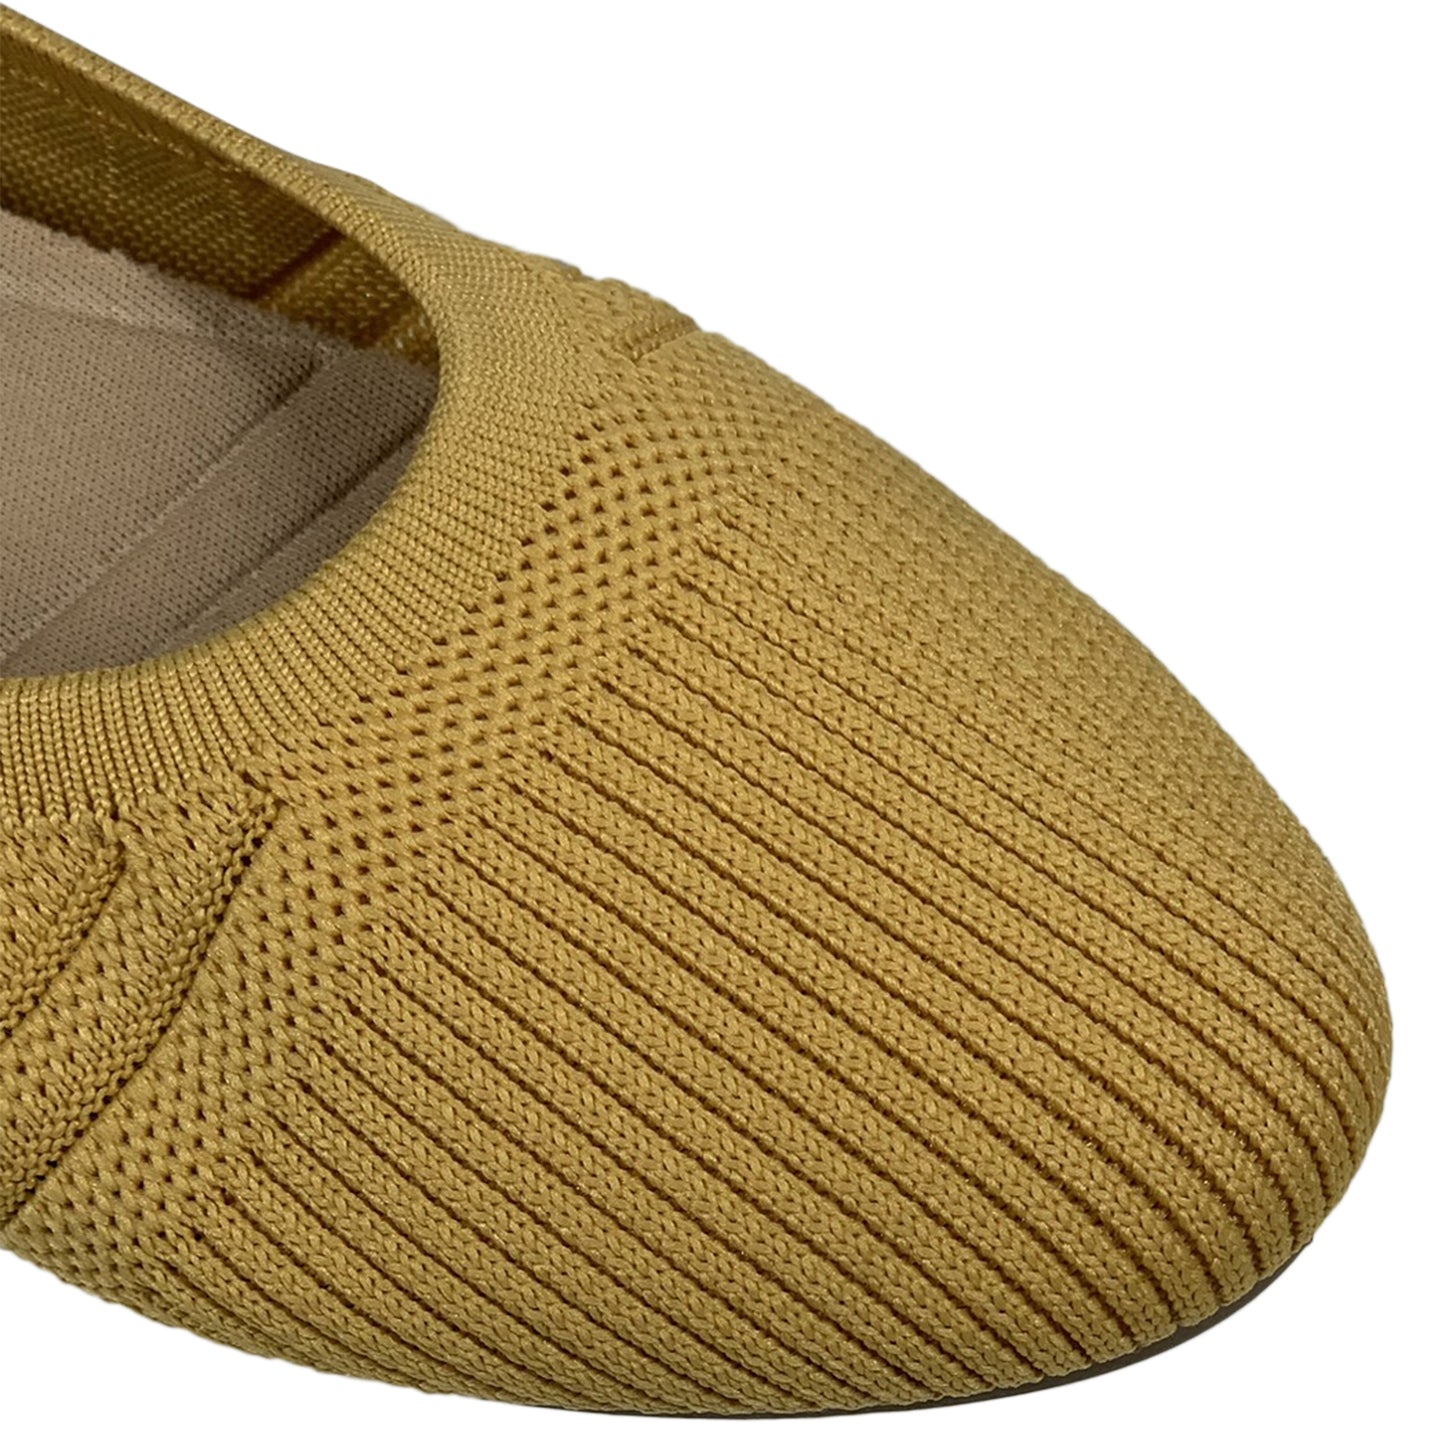 SOBEYO Sweater Round Toe Ballet Flats Soft Foldable Sole Yellow